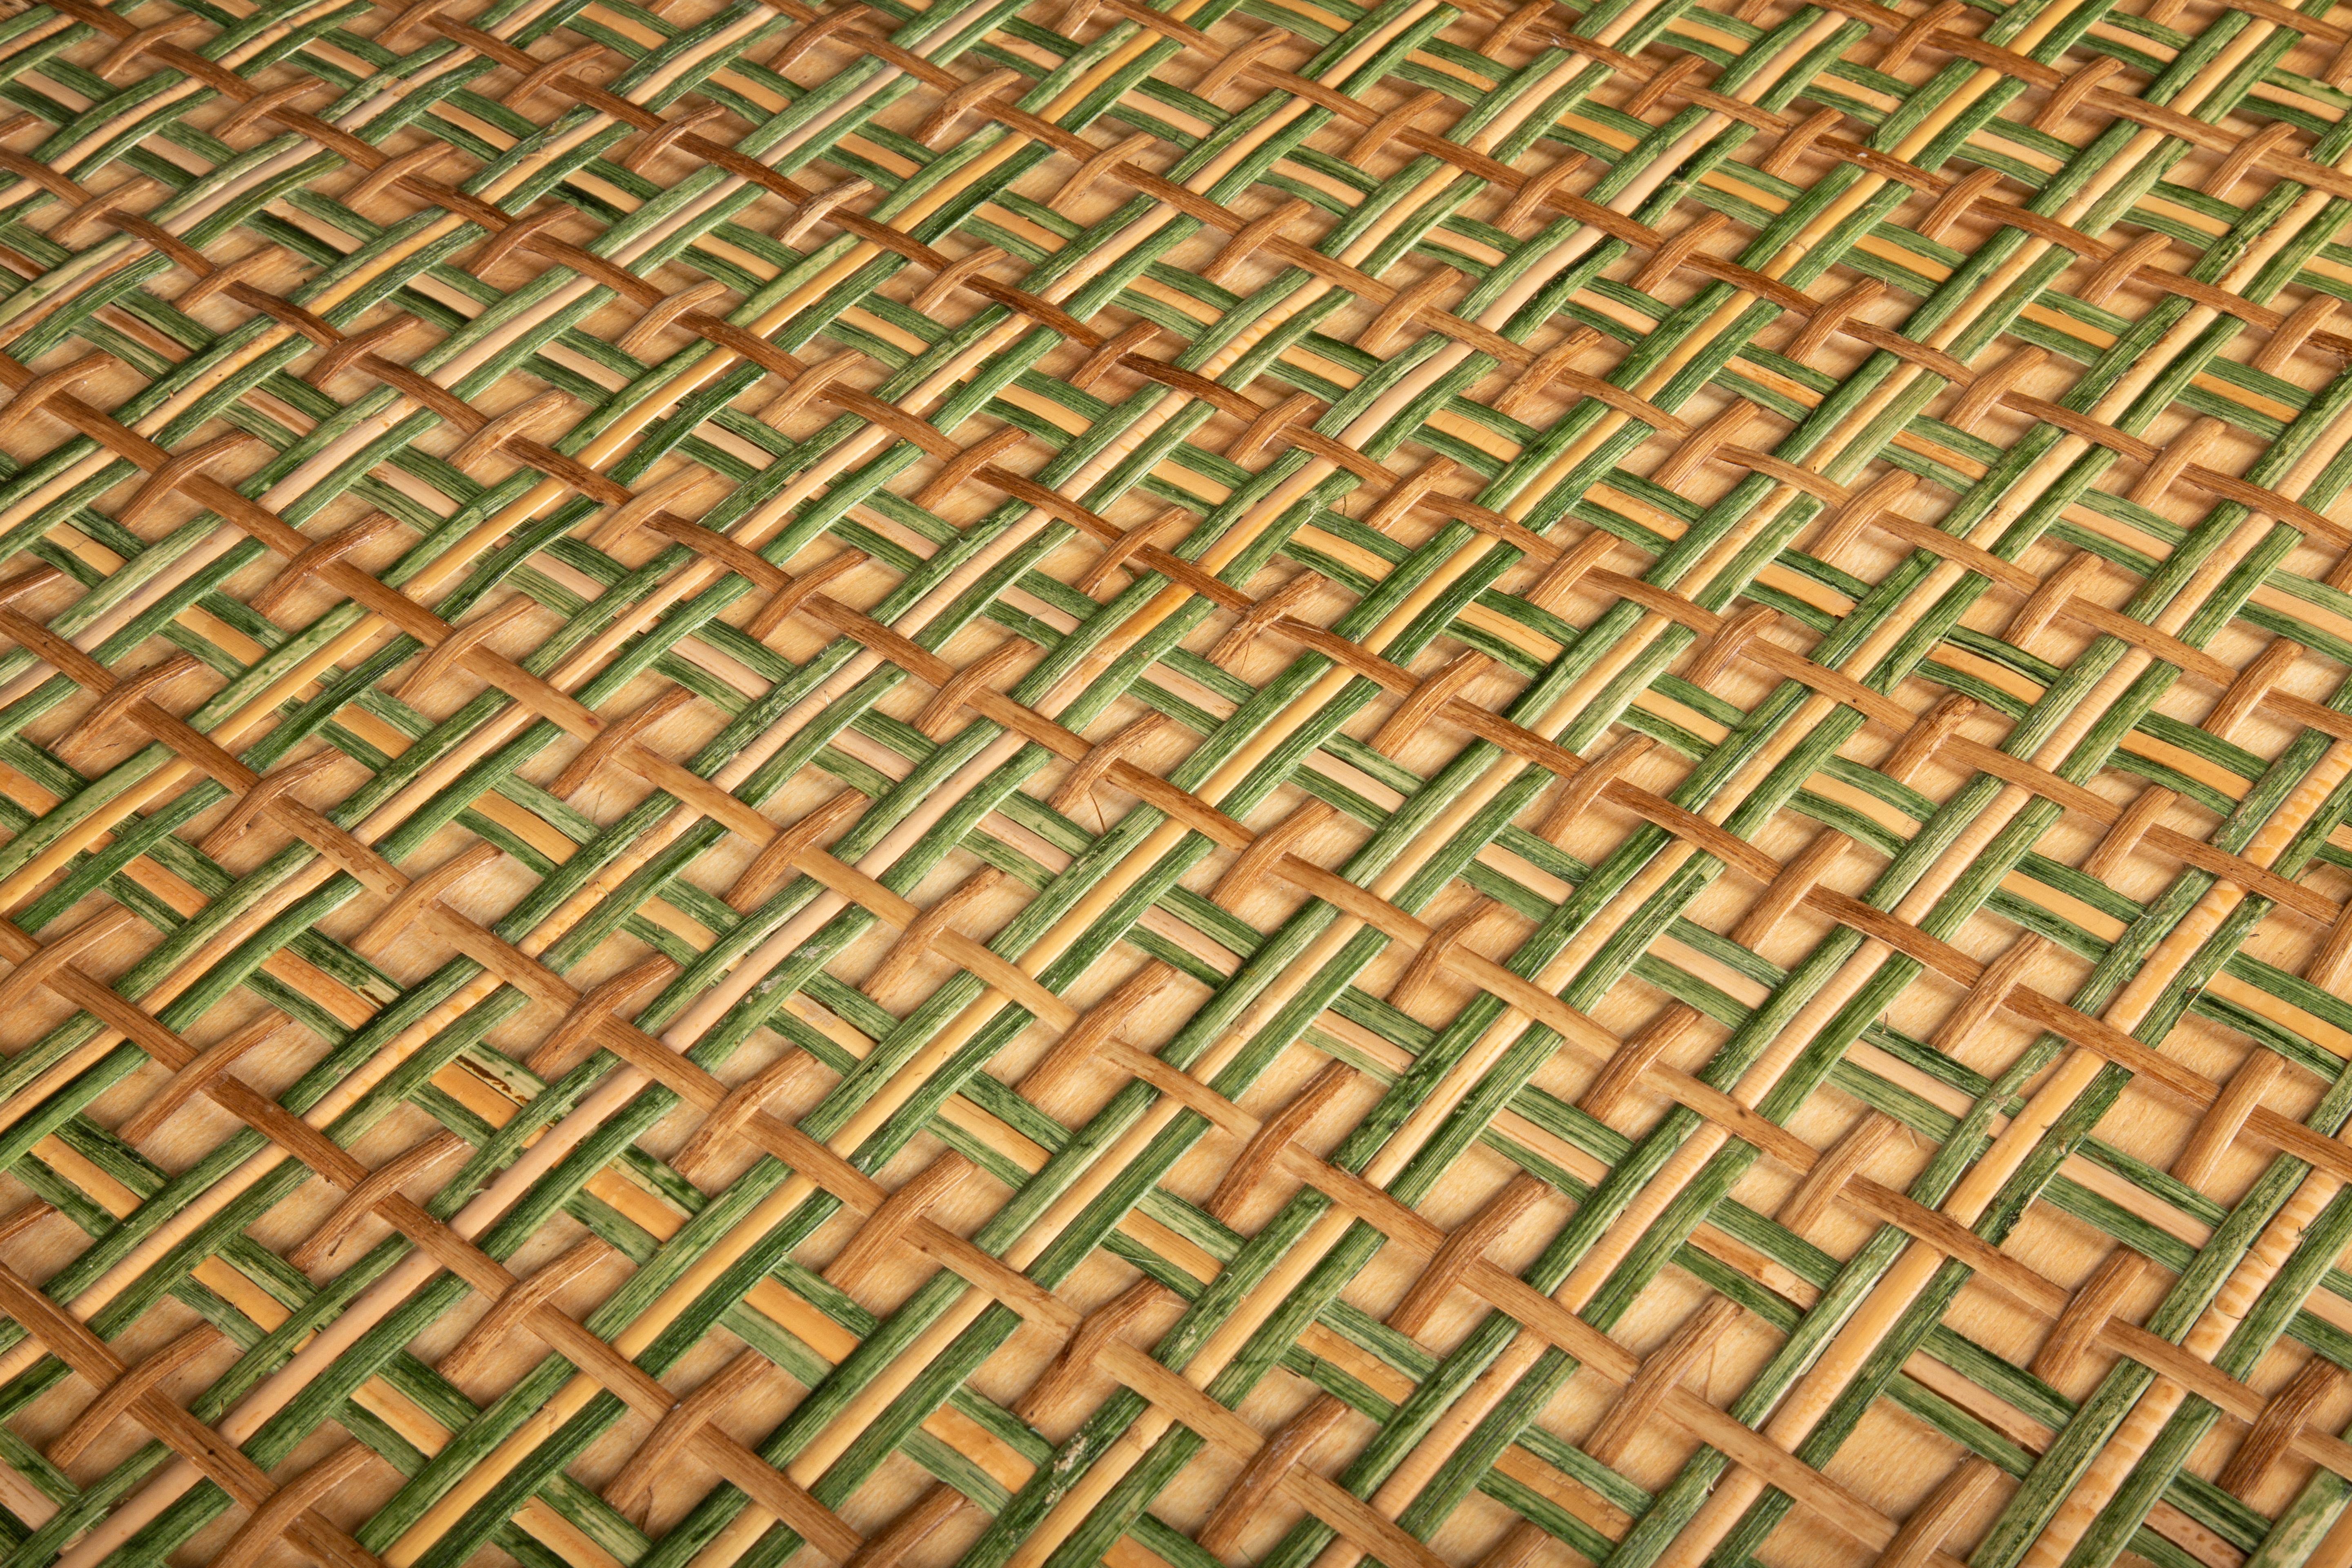 Hand-Woven Green and Tan Rattan Rectangular Coffee Table